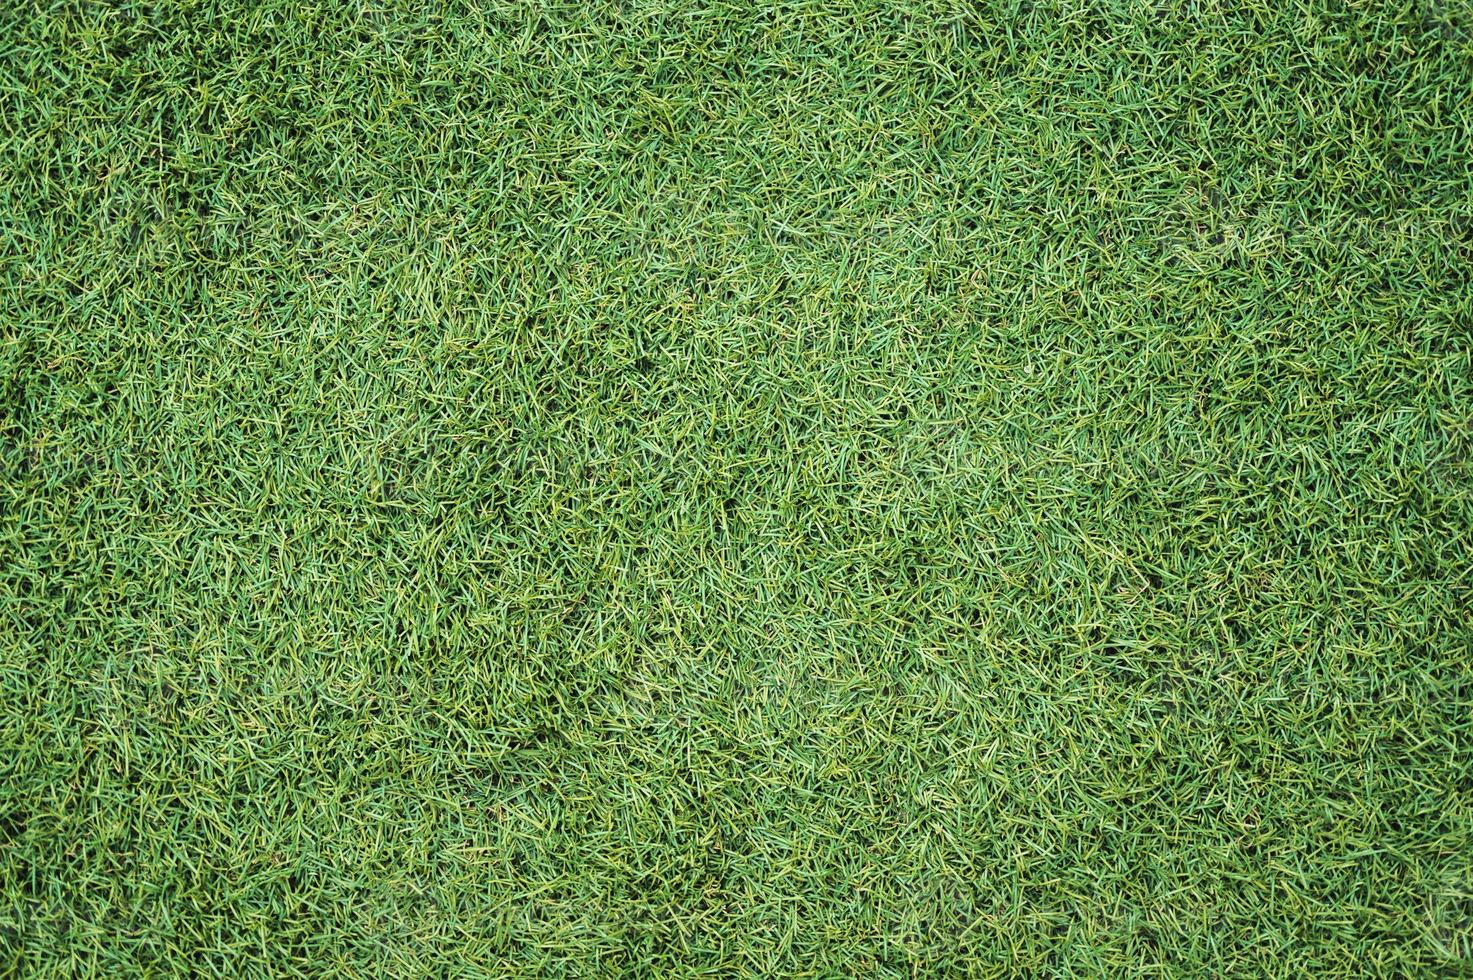 Artificial grass texture photo